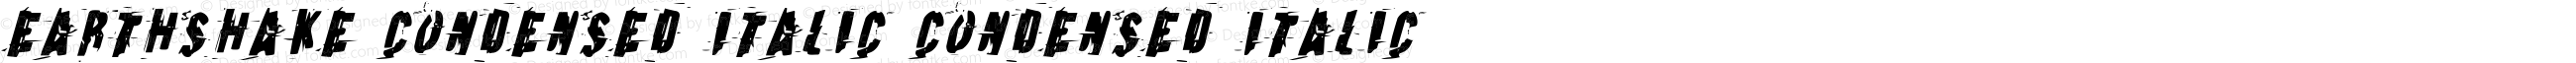 Earthshake Condensed Italic